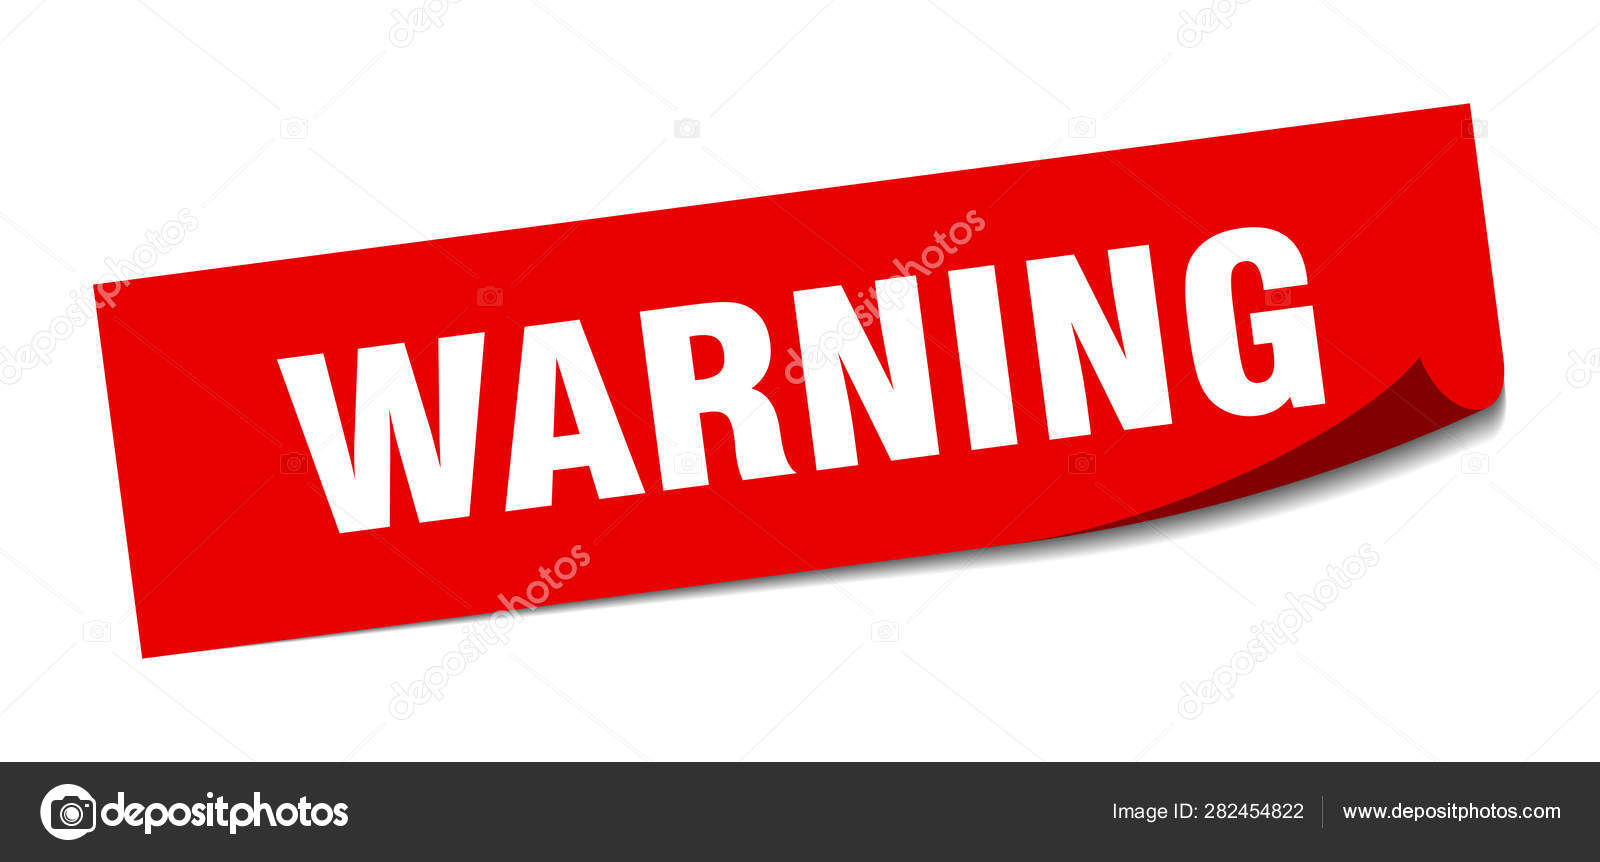 Warnung! Warnschild, Aufkleber, Sticker Stock-Vektorgrafik